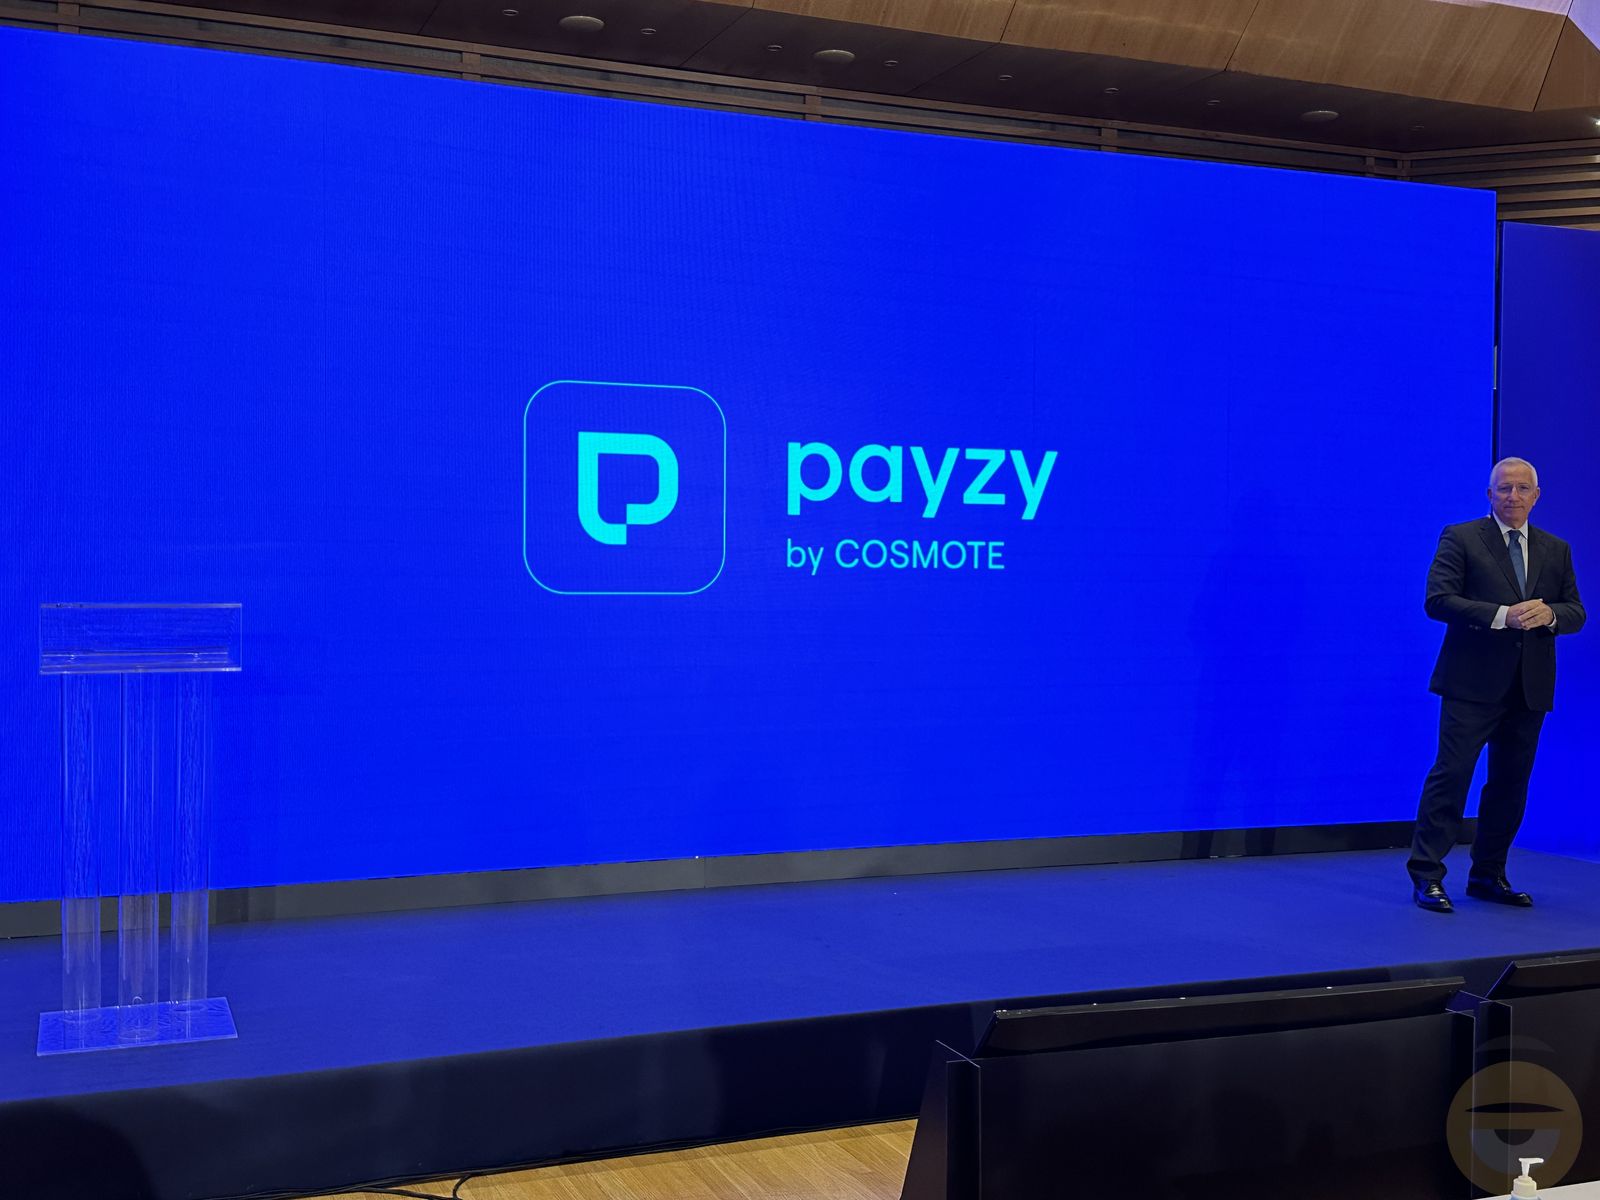 payzy, η νέα πλήρως ψηφιακή πρόταση της Cosmote για ηλεκτρονικές πληρωμές με smartphone